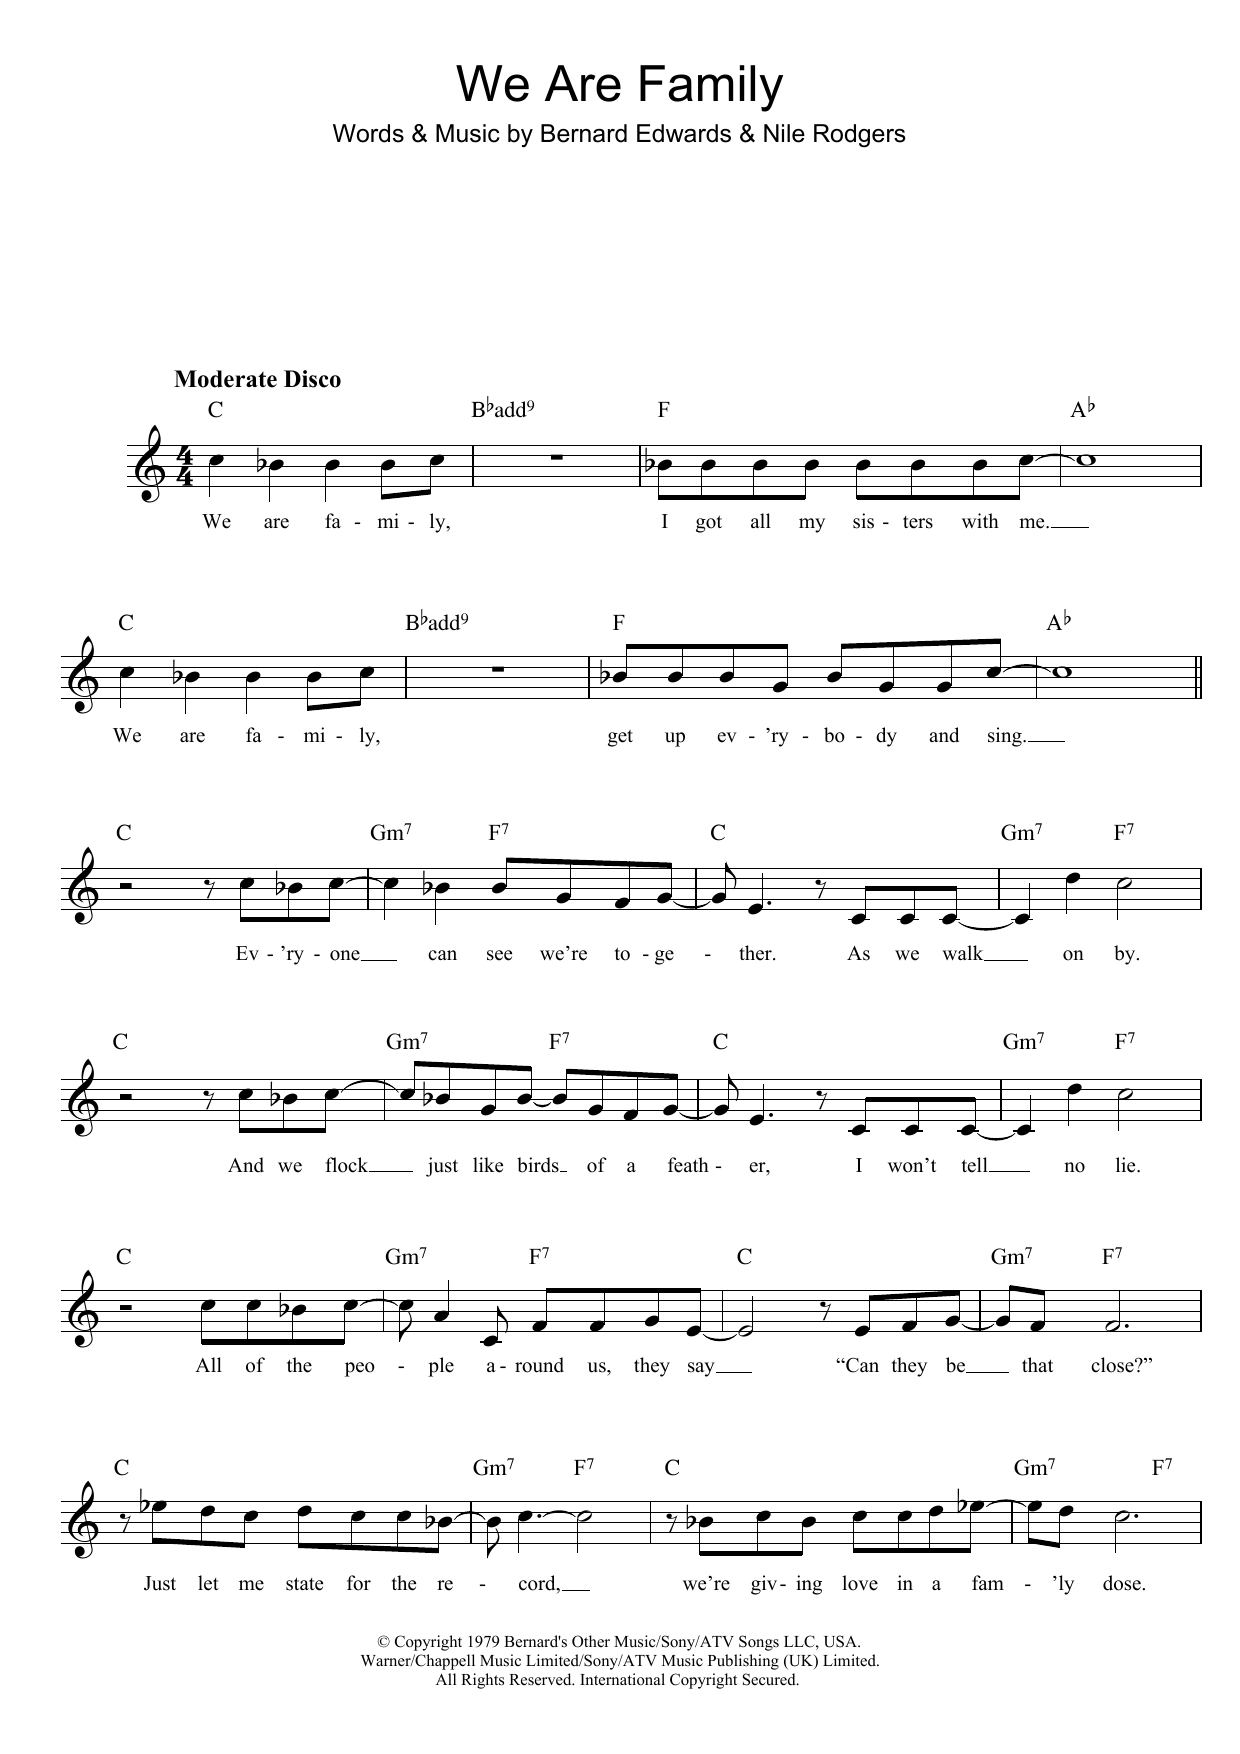 Sister Sledge We Are Family sheet music notes printable PDF score